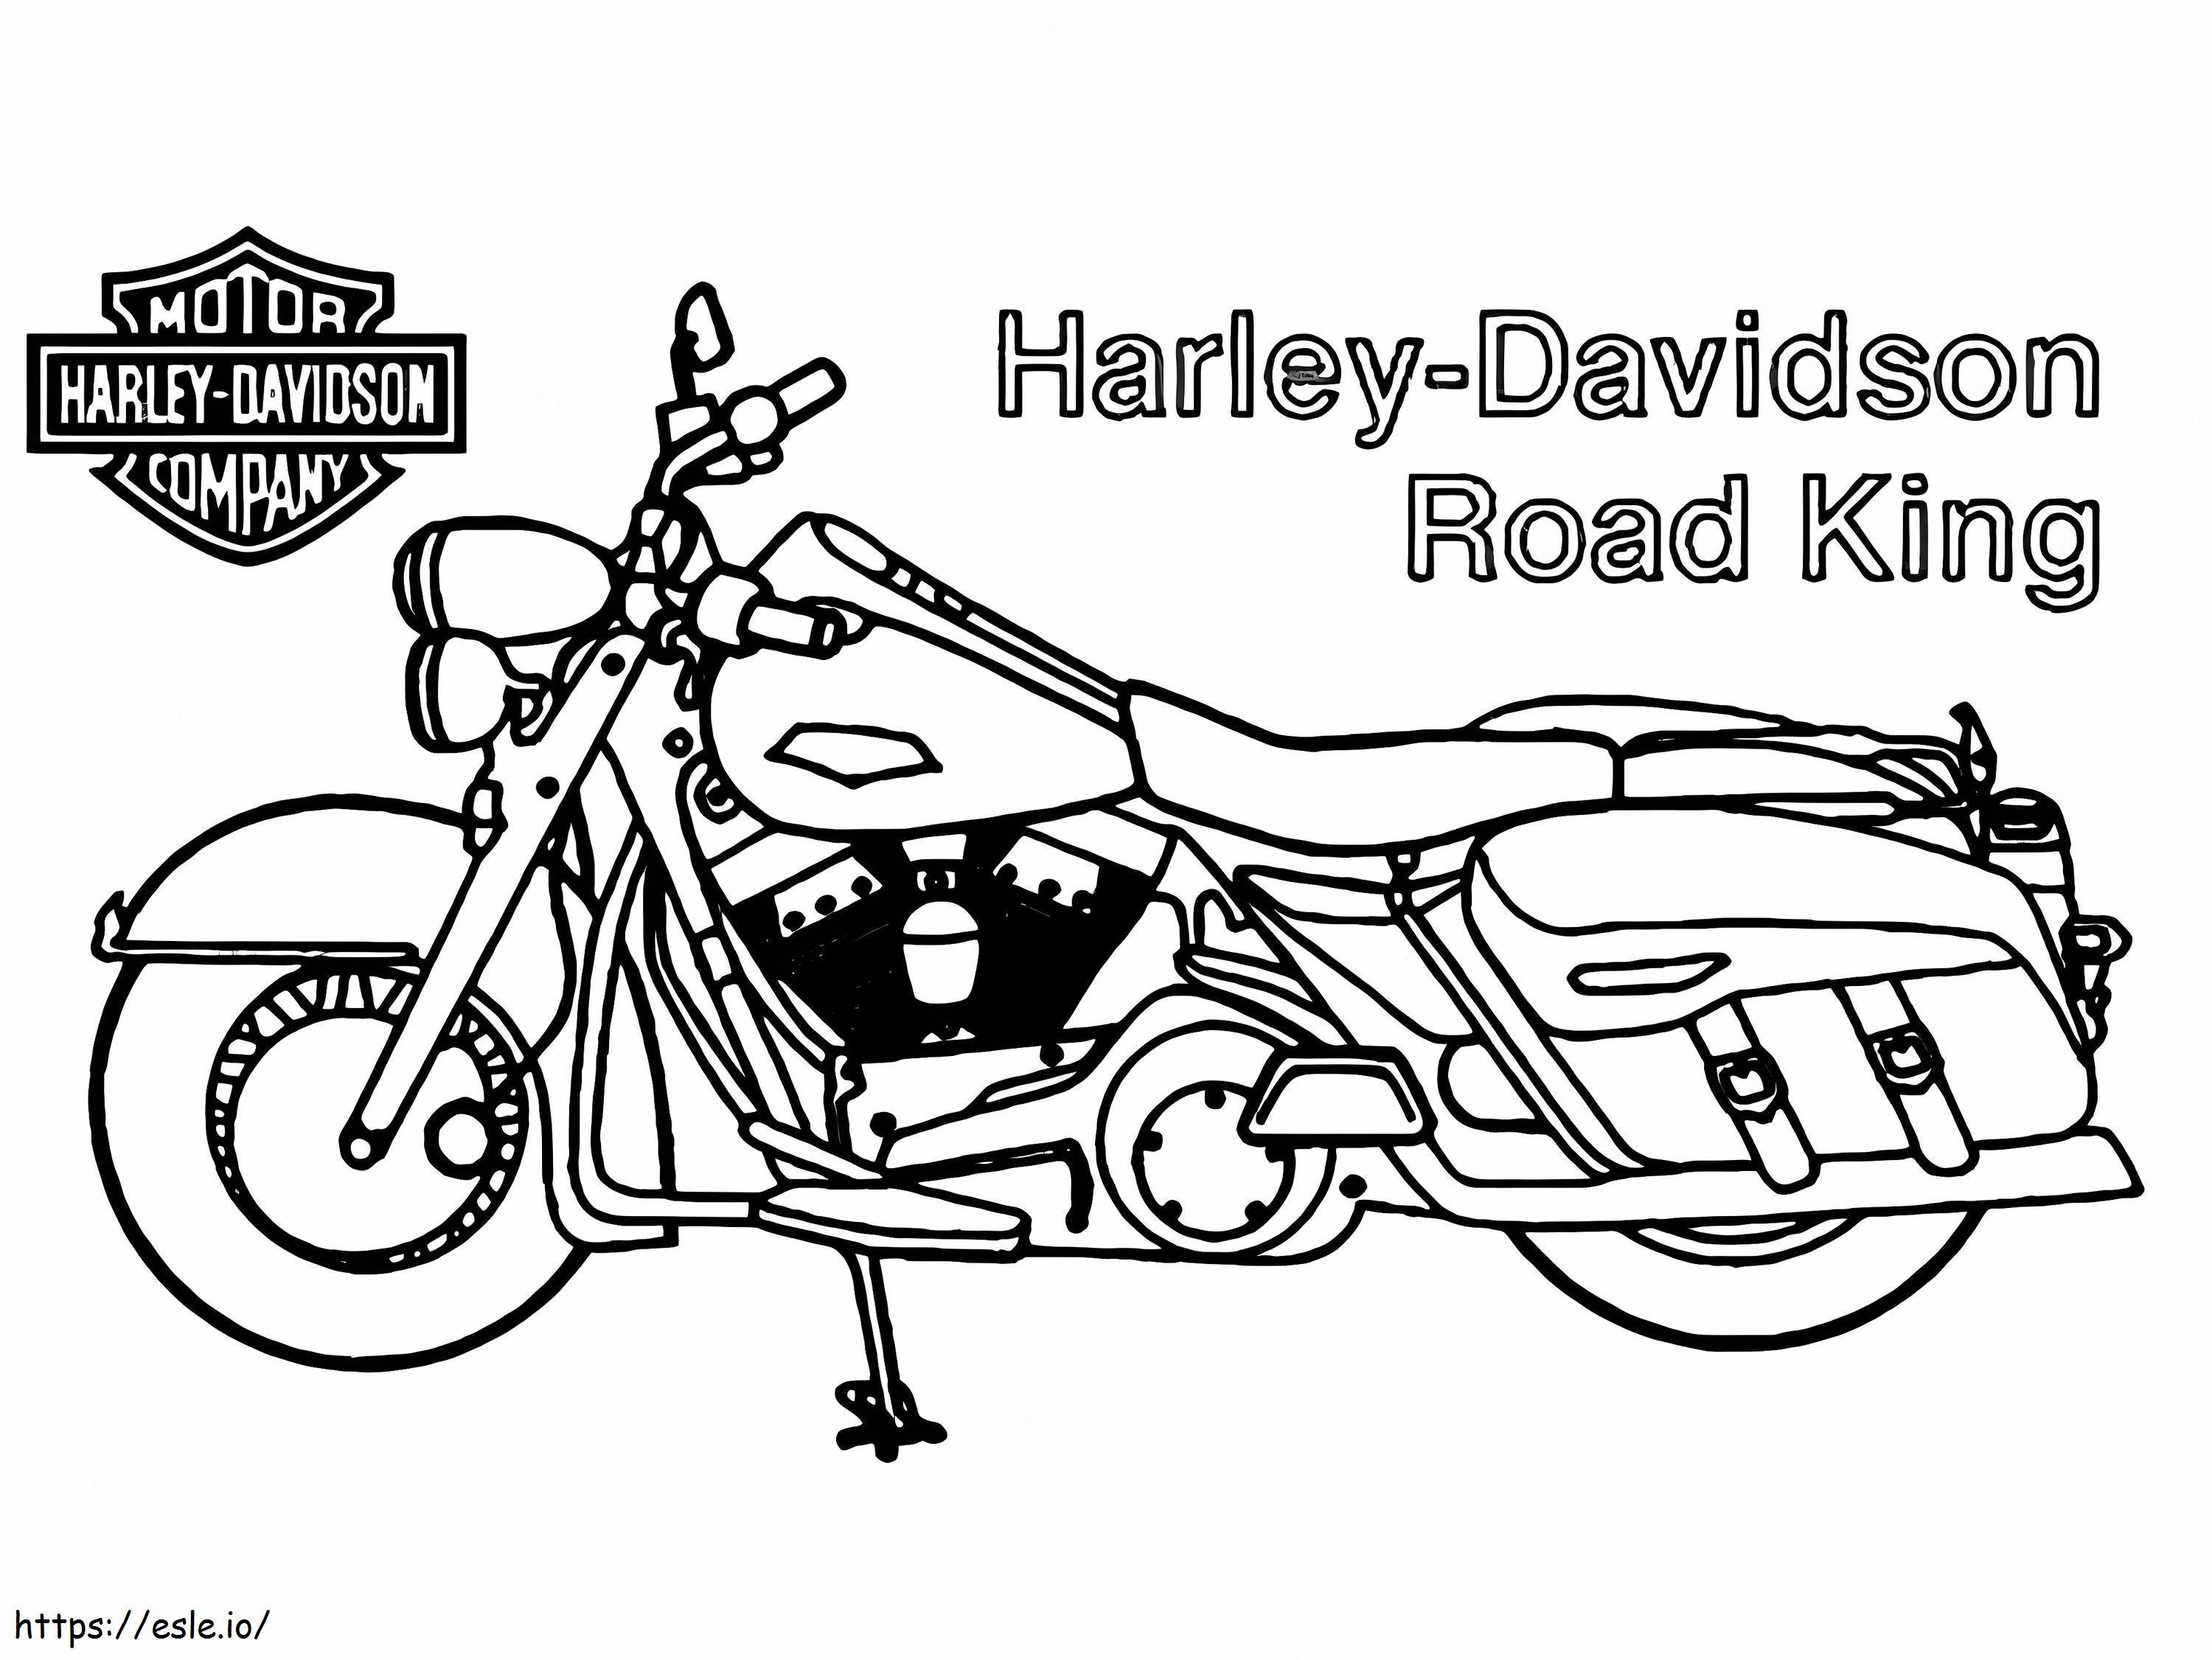 Harley Davidson Road King 1 kolorowanka